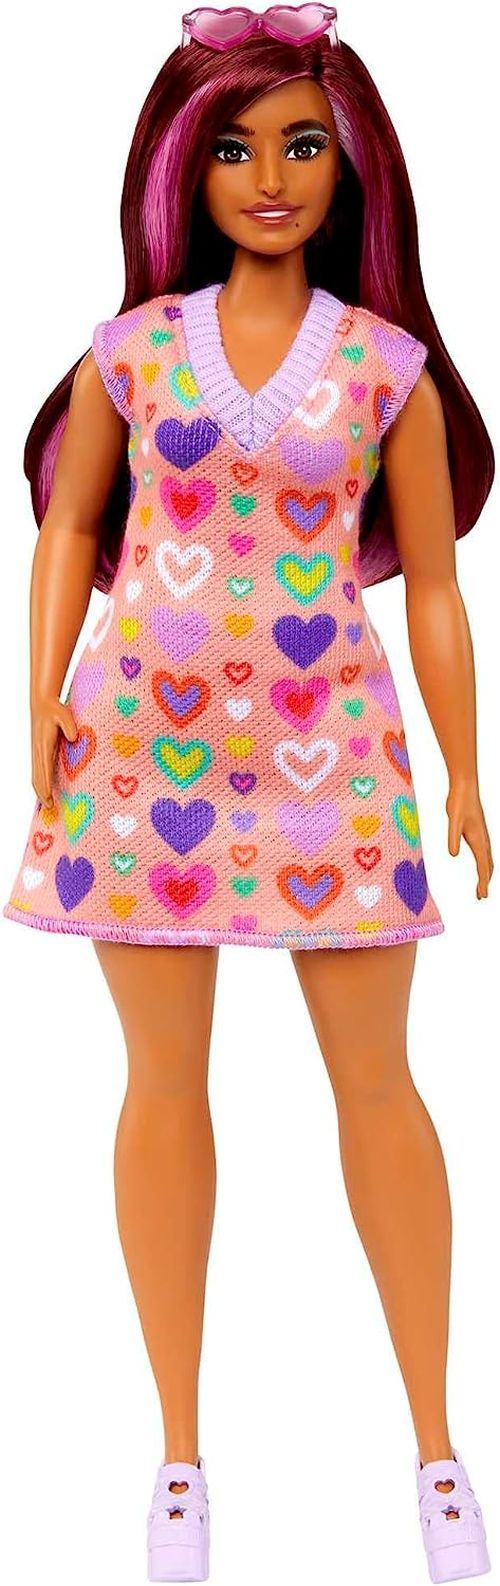 MATTEL Barbie In A Heart Colored Dress - .